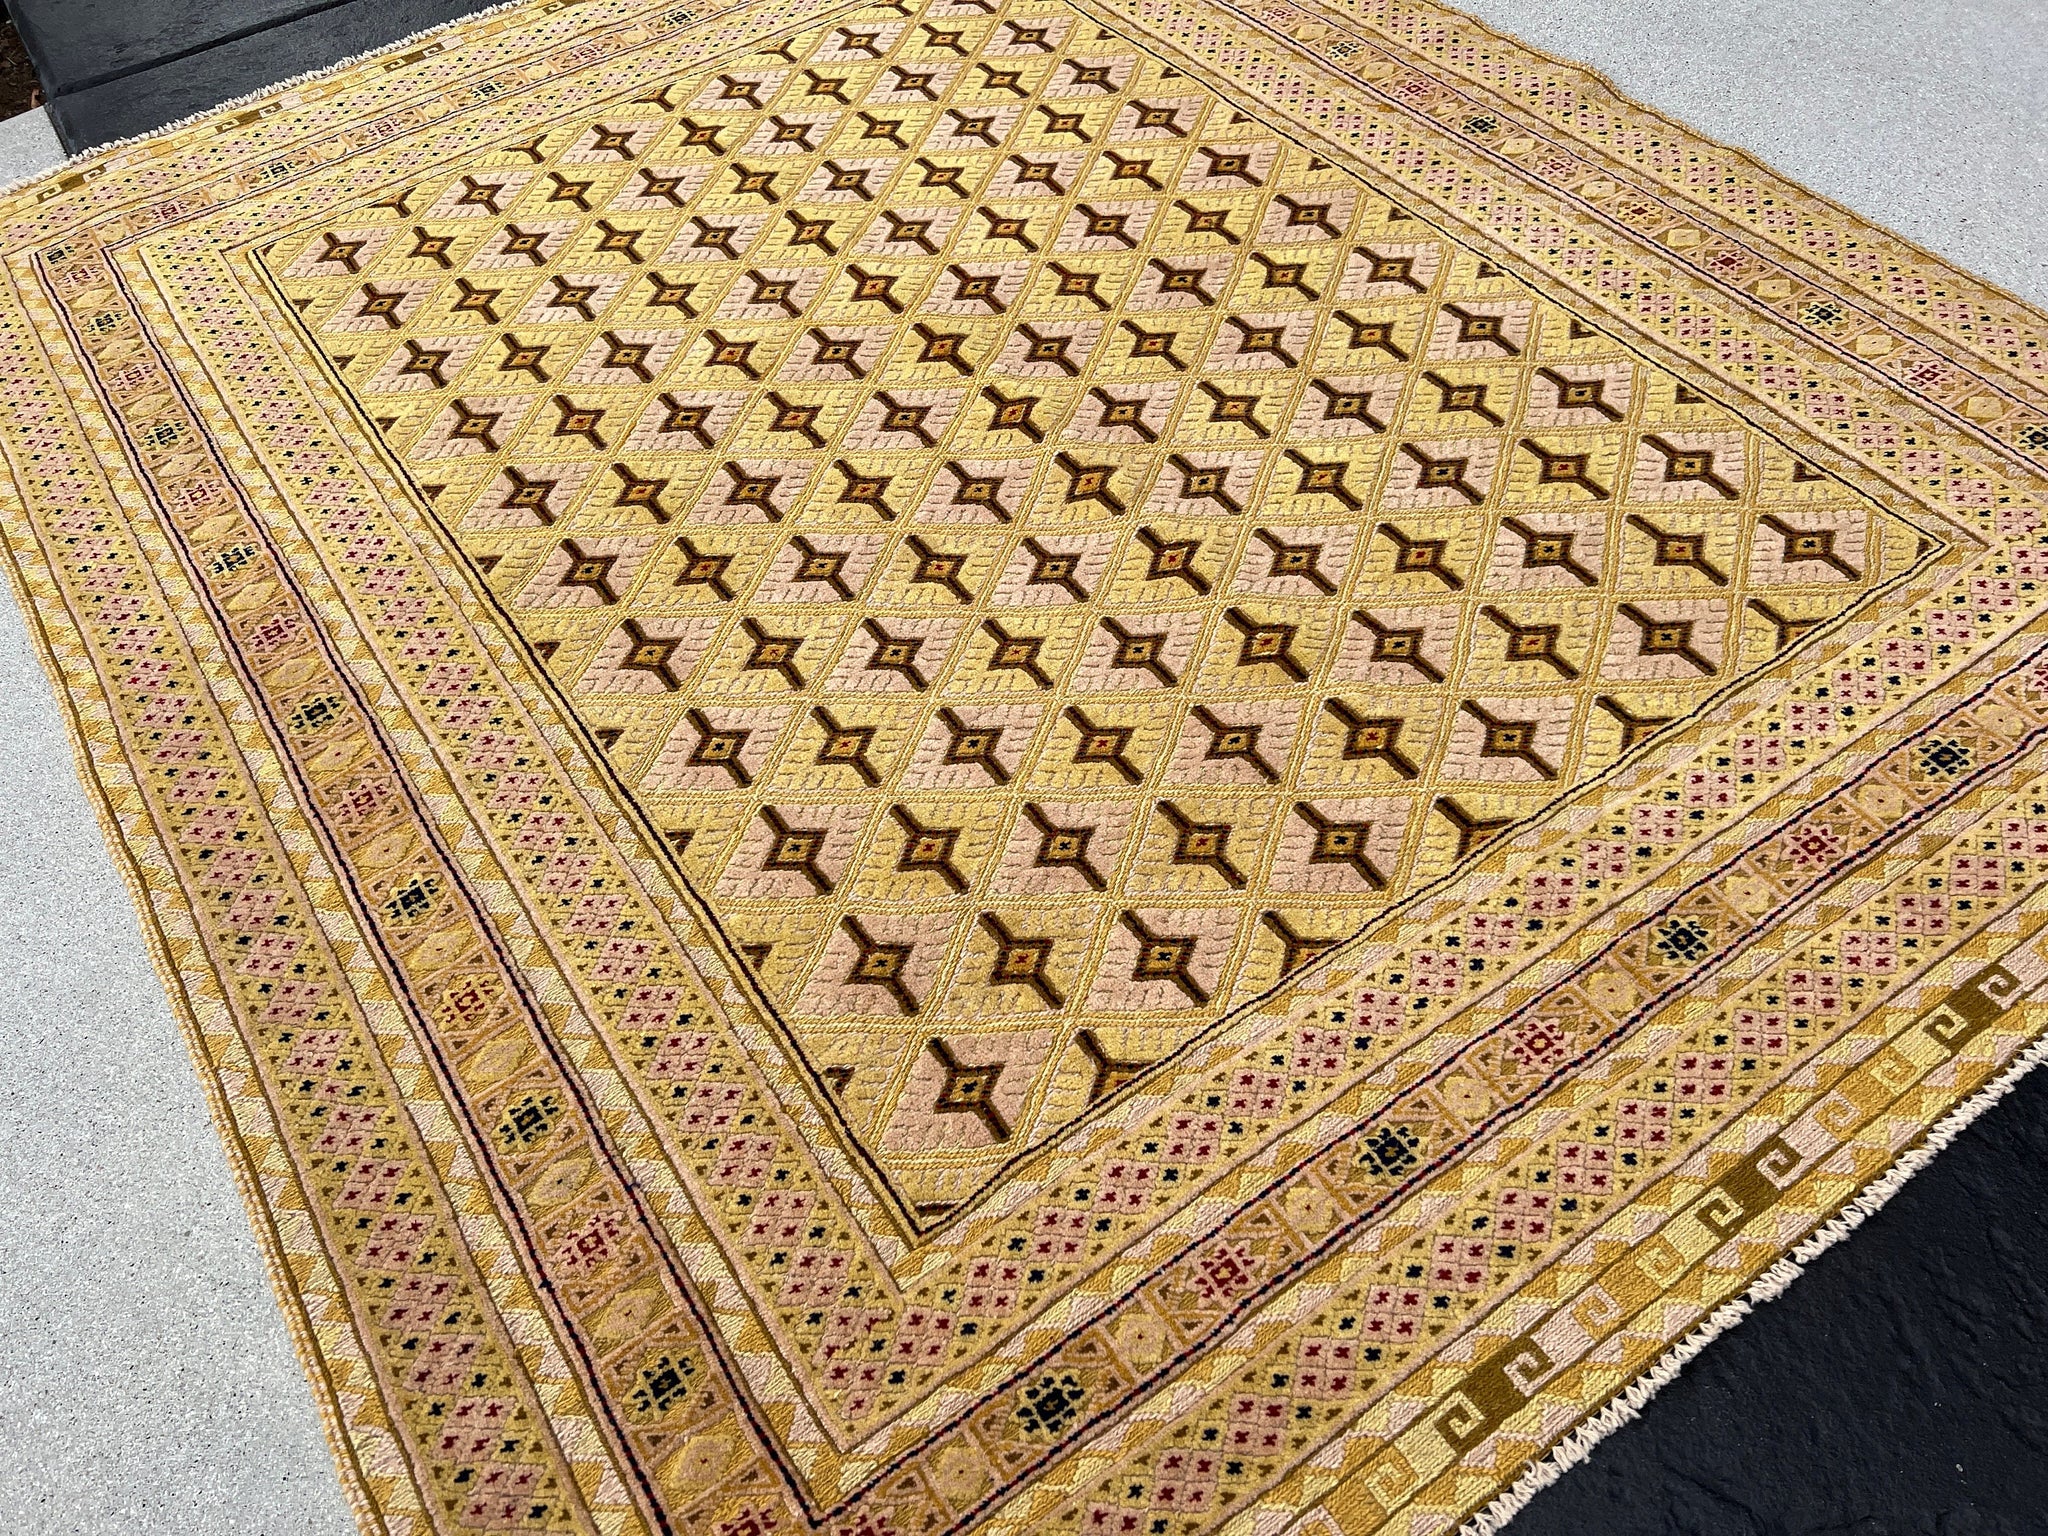 5x6 (150x215) Handmade Vintage Kilim Afghan Rug | Cornsilk Taupe Gold Mustard Yellow Crimson Red Navy Blue Cream Olive Green | Wool